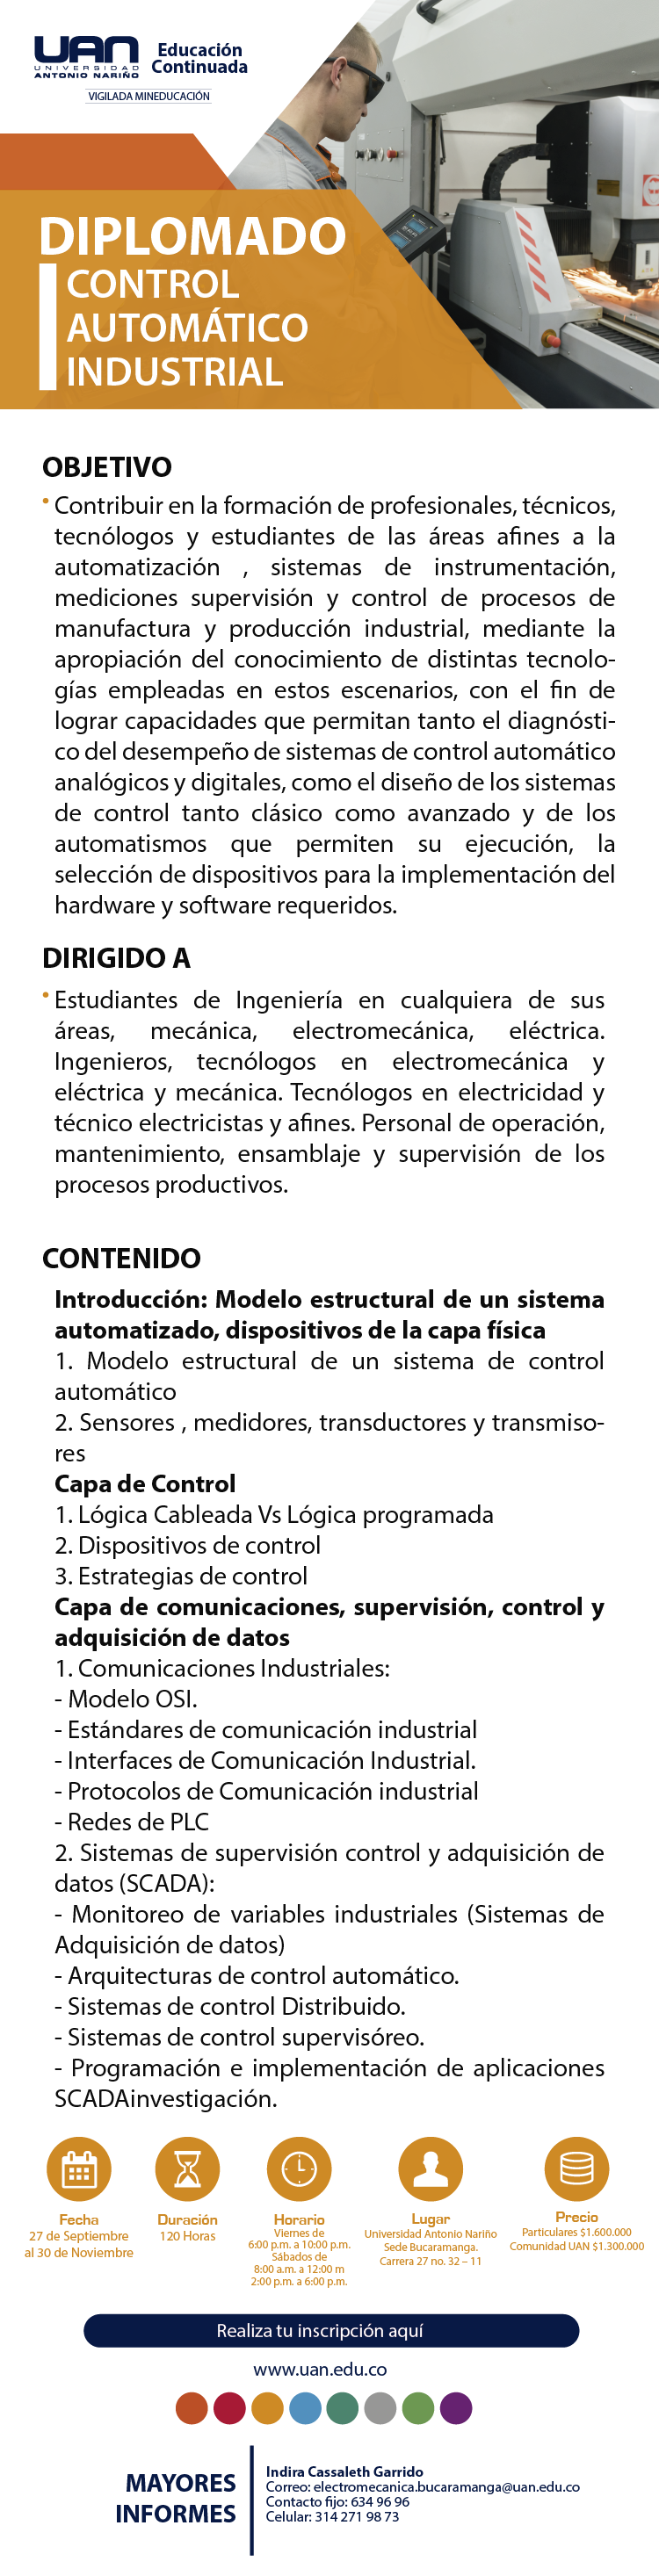 ControlAutomaticoIndustrial Bucaramanga2019 M